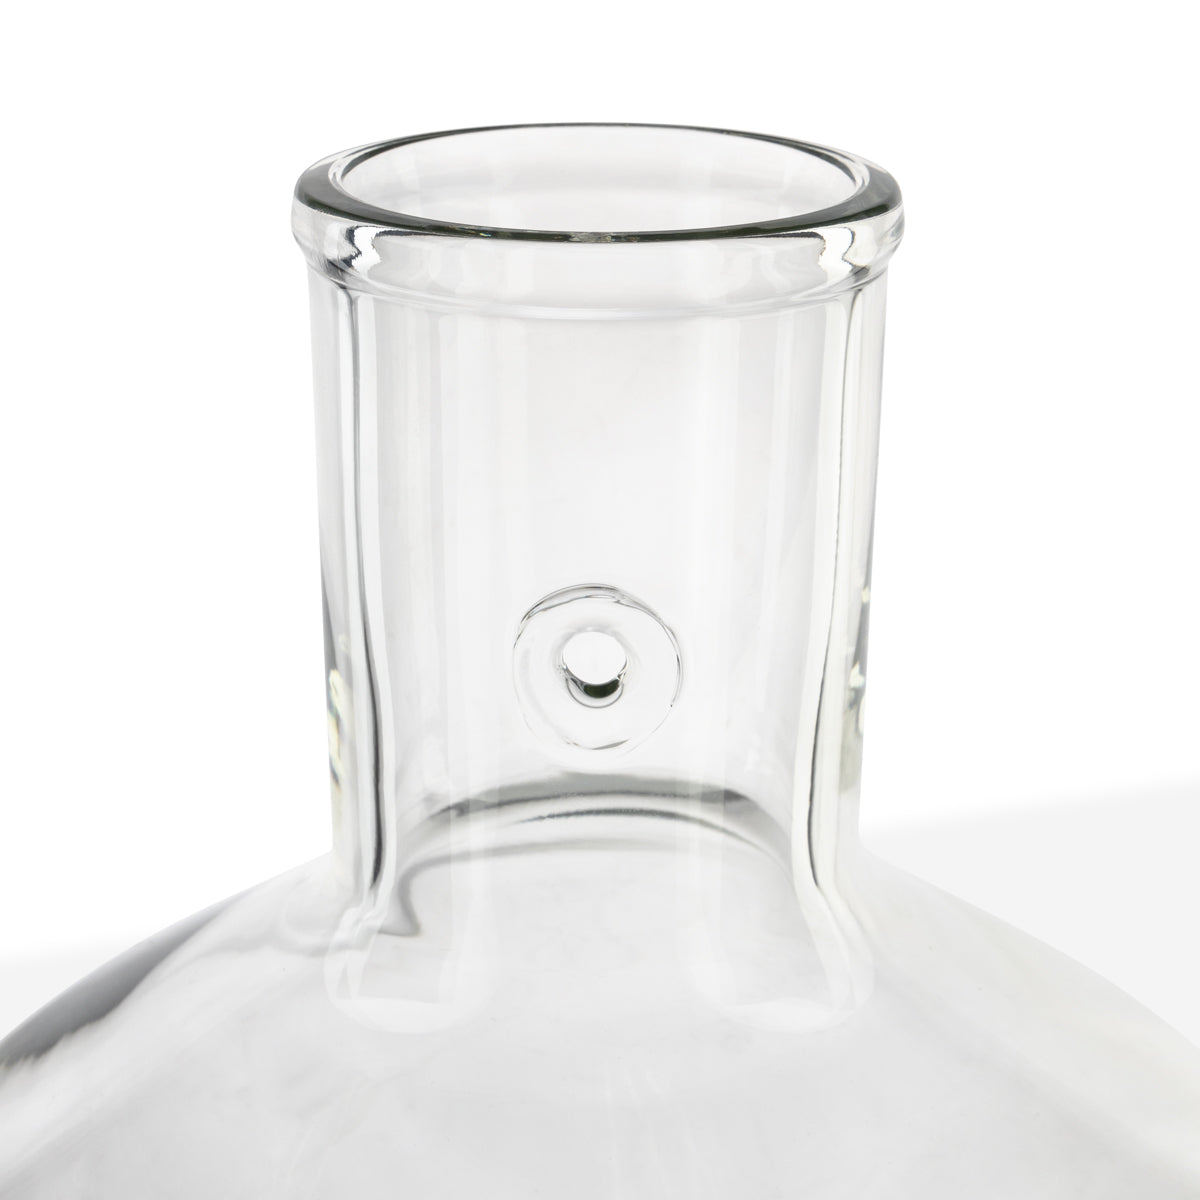 Schott DURAN® | Filtering Flasks - Bottle Shape w/ Keck Set | 20,000mL